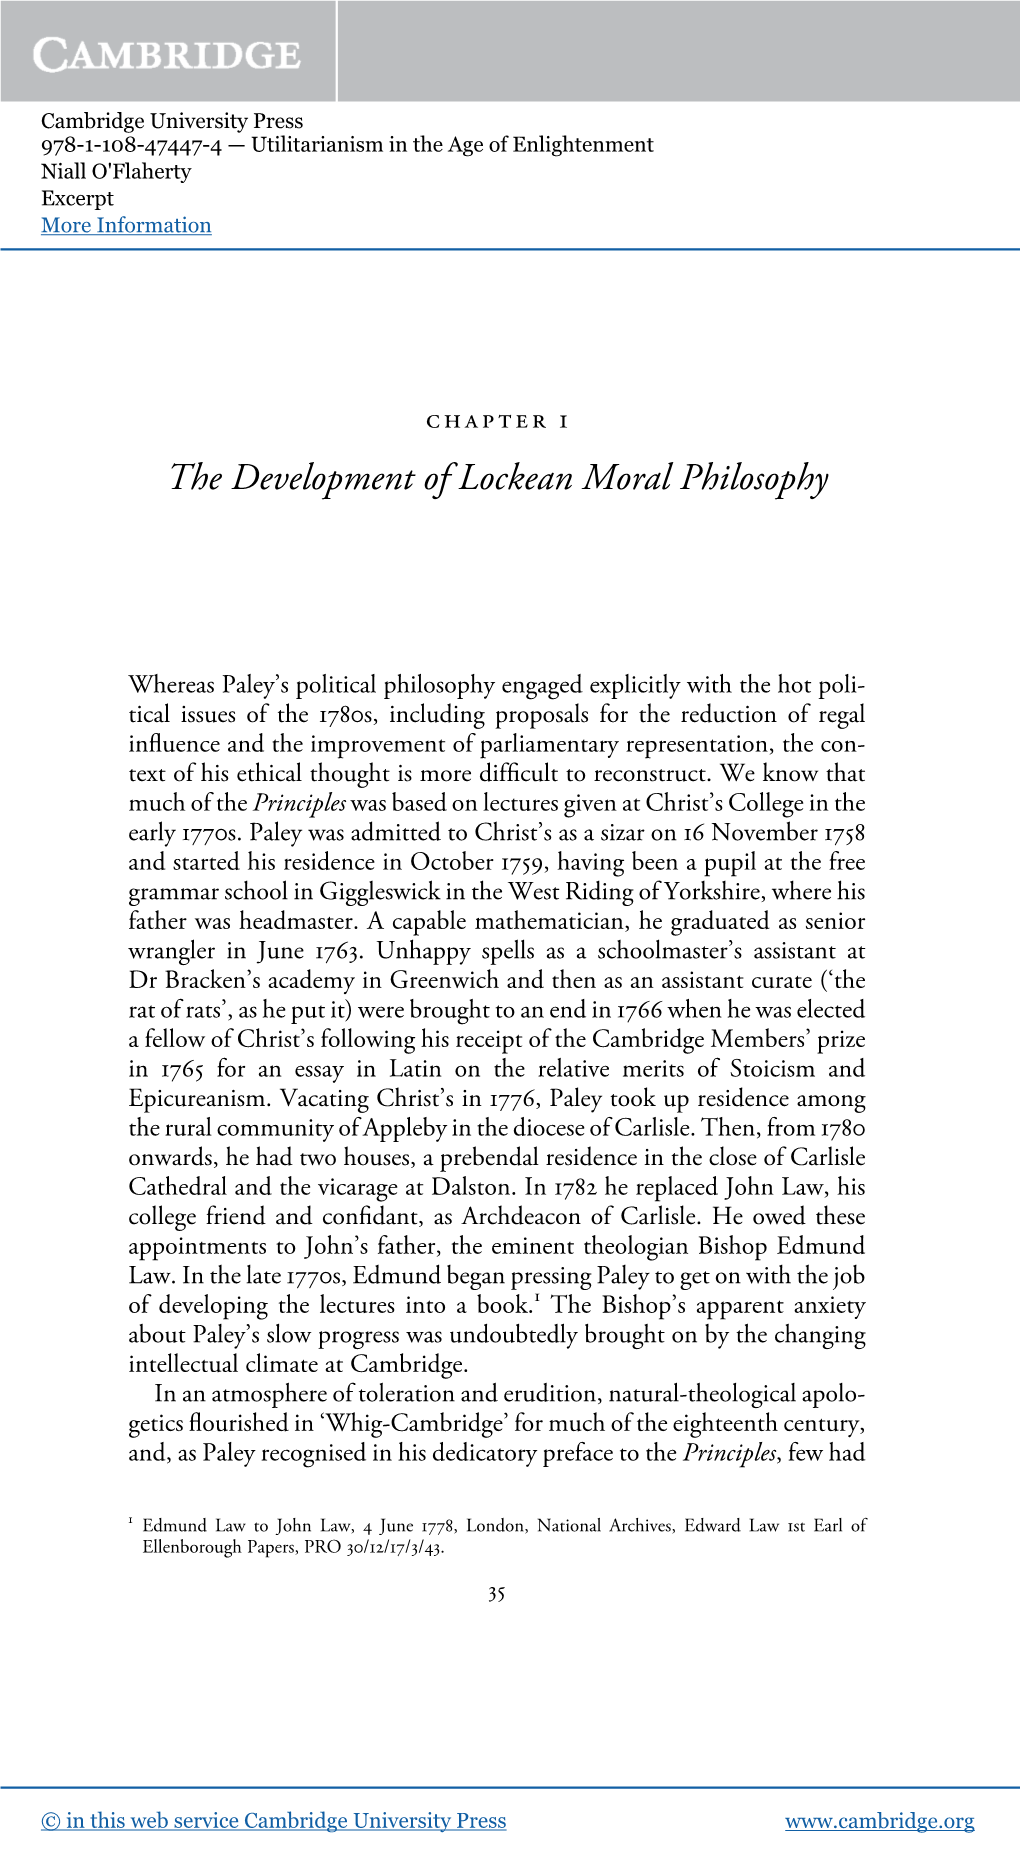 The Development of Lockean Moral Philosophy